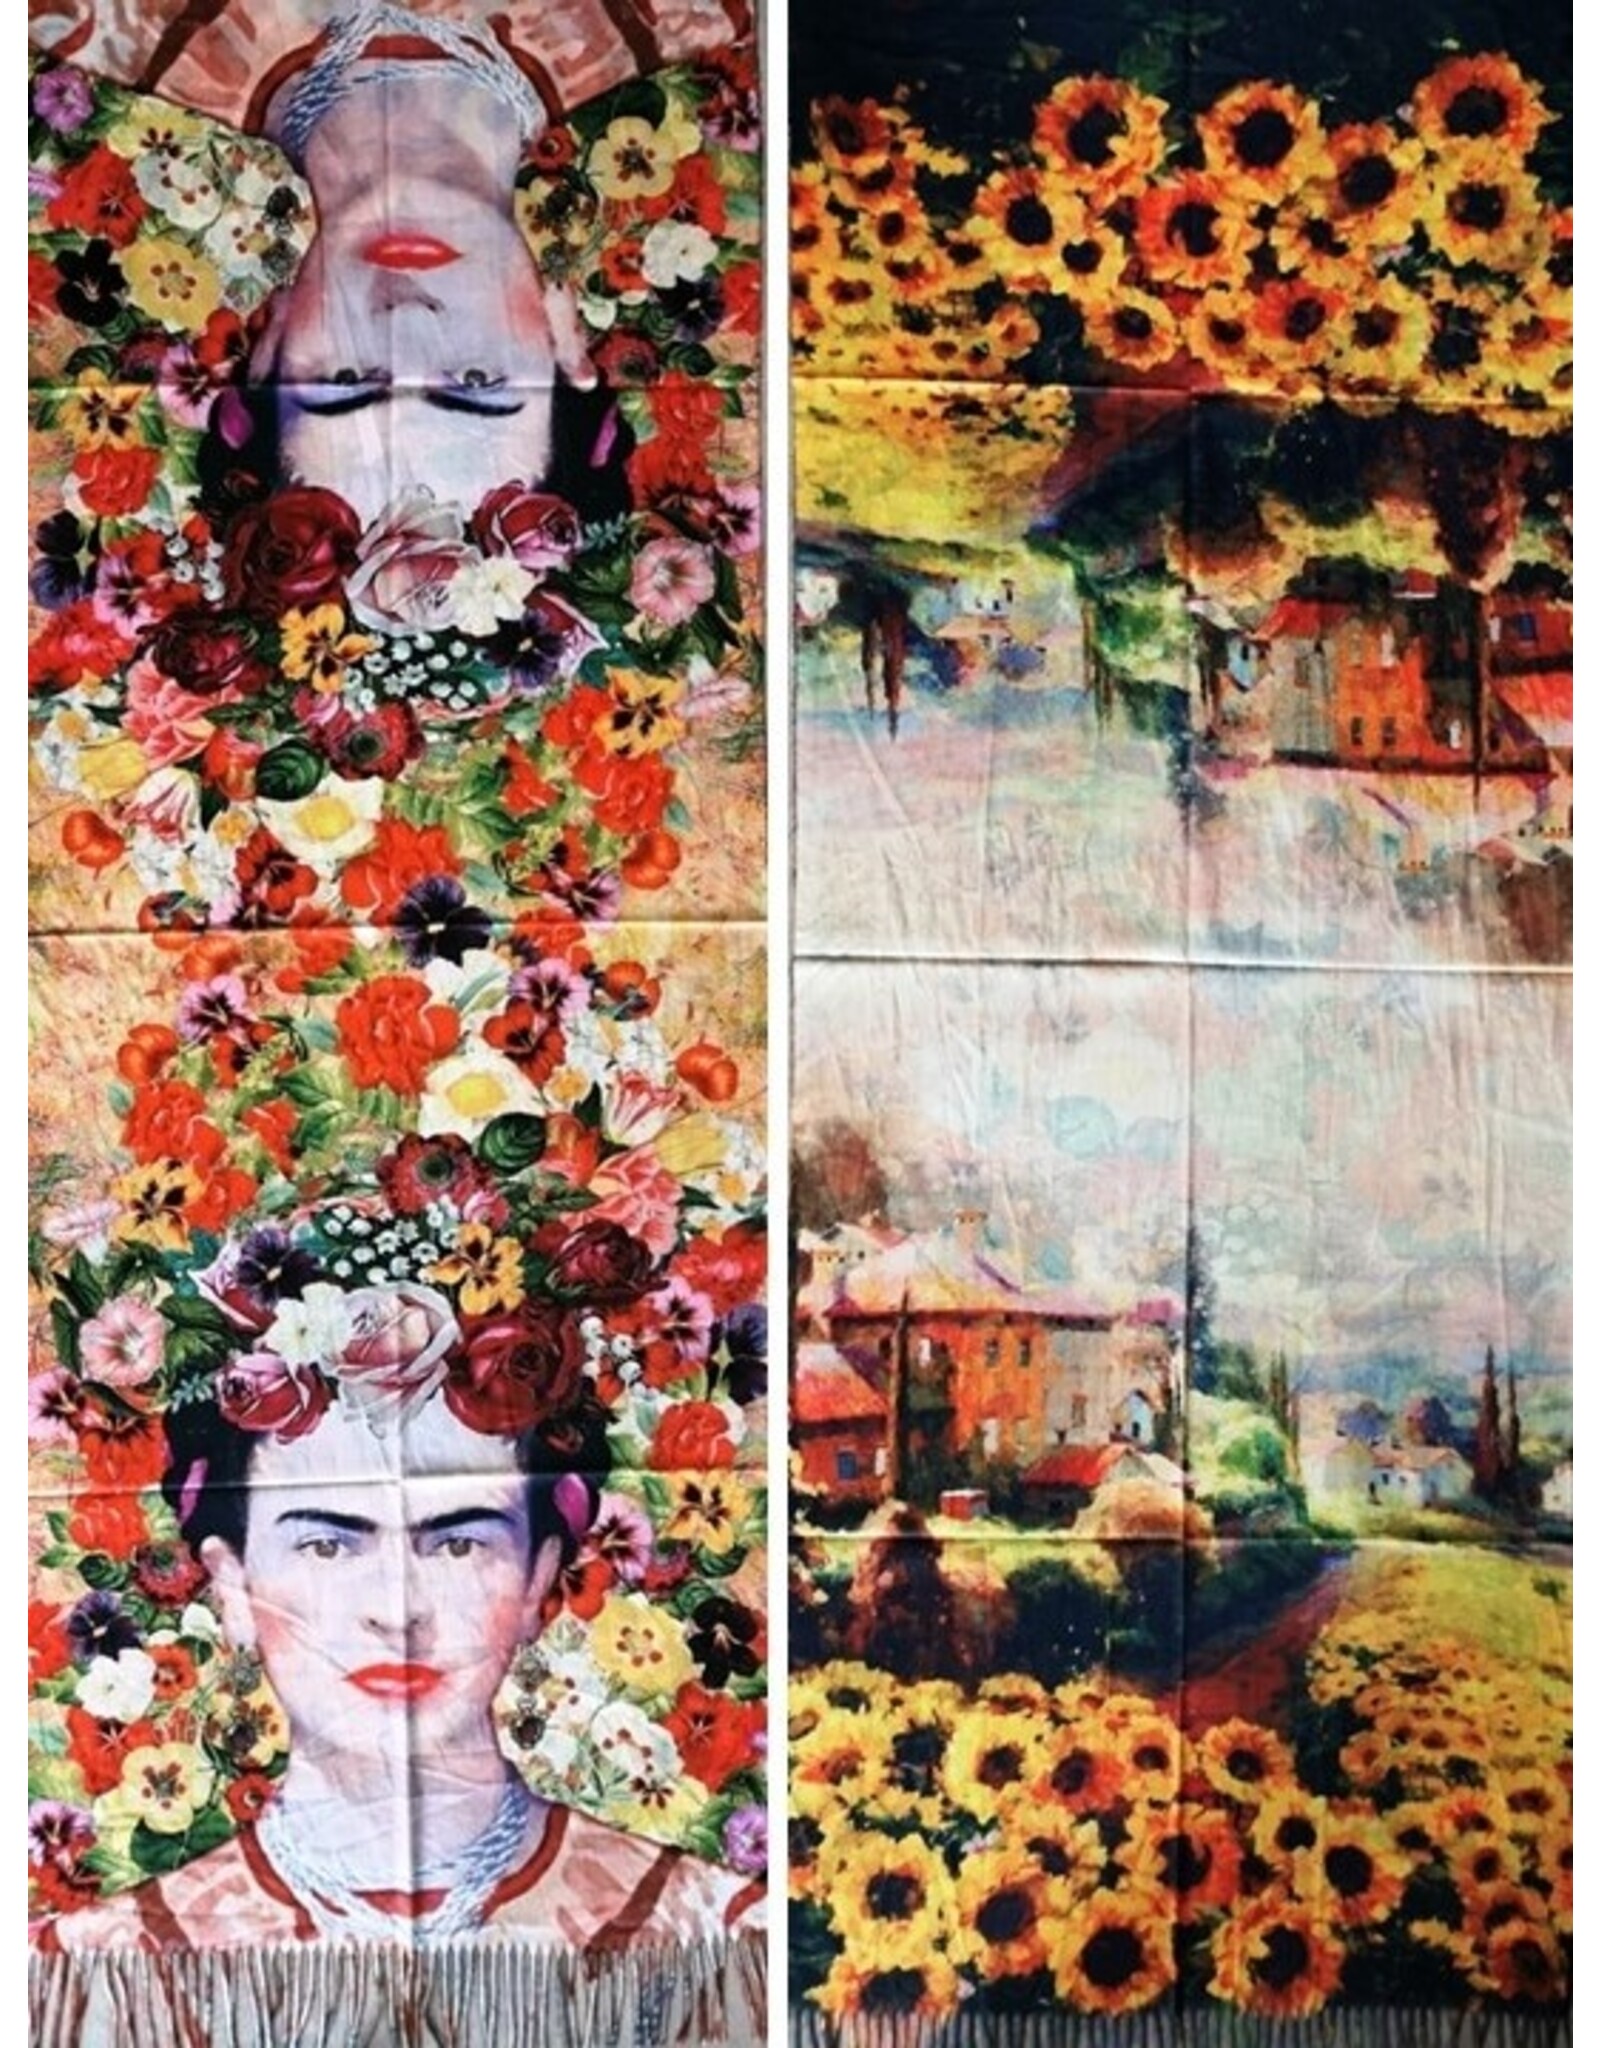 Trukado Miscellaneous -  Frida Kahlo shawl dubble sided print - 180cm x 70cm